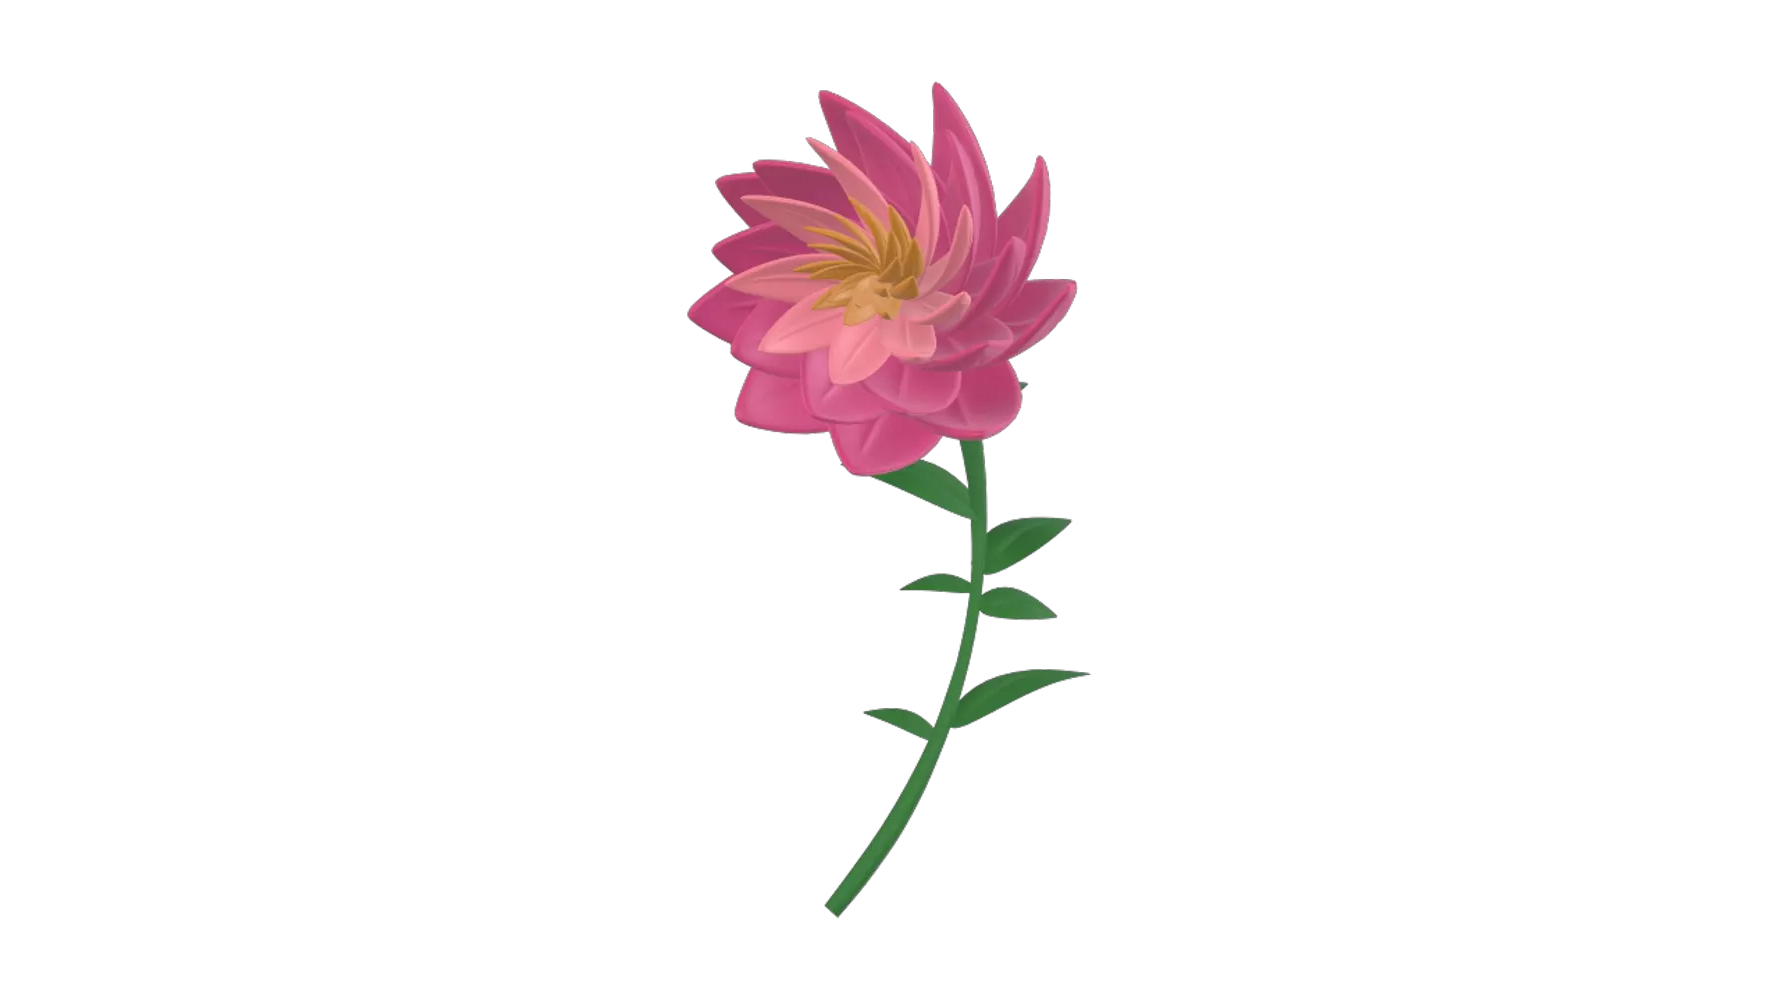 Lotus Flower 3D Graphic